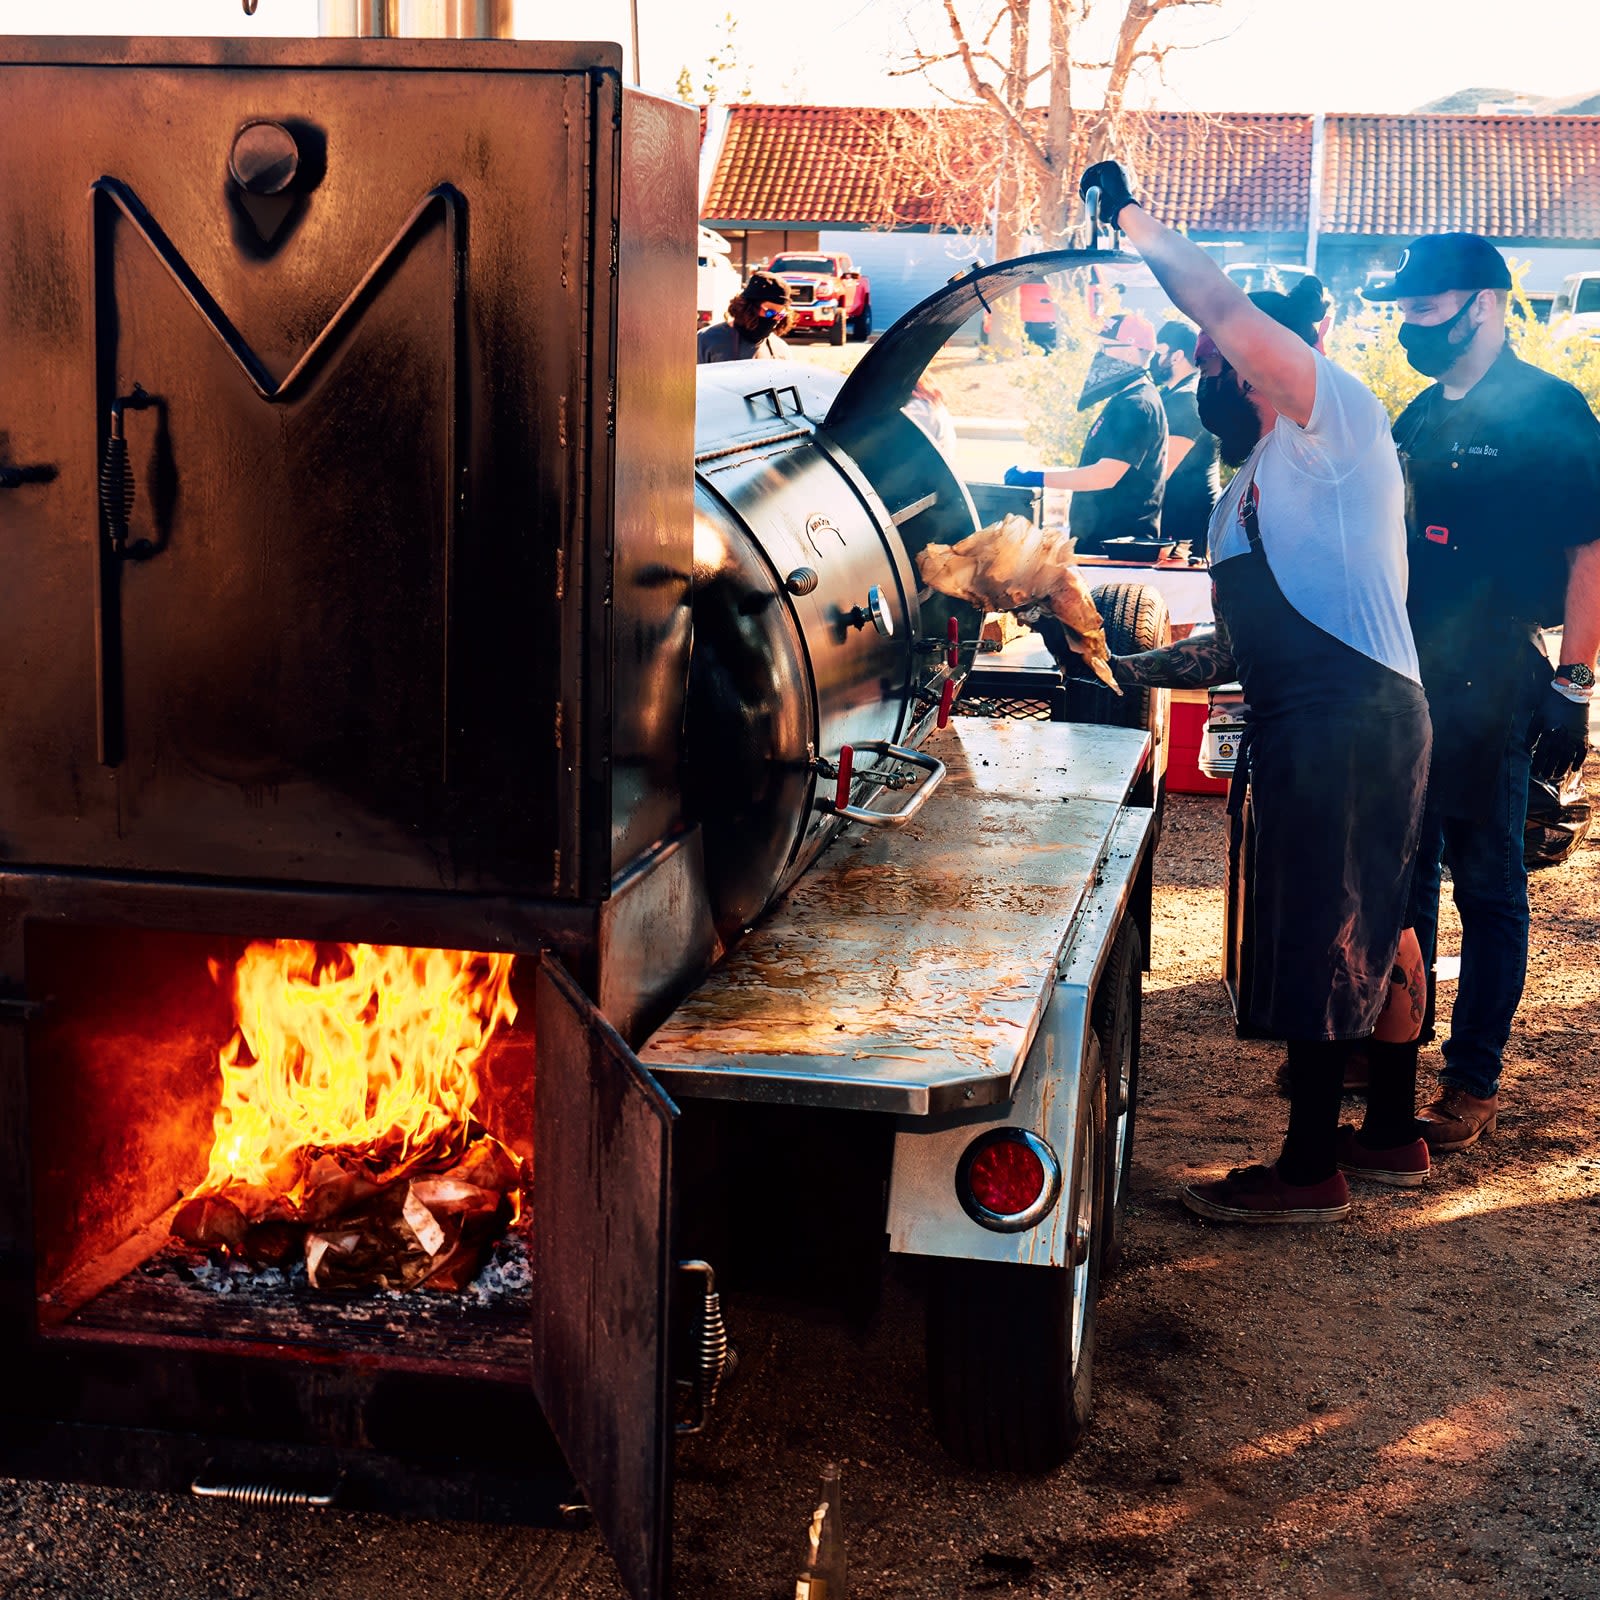 How three mobile street-food vendors make a living